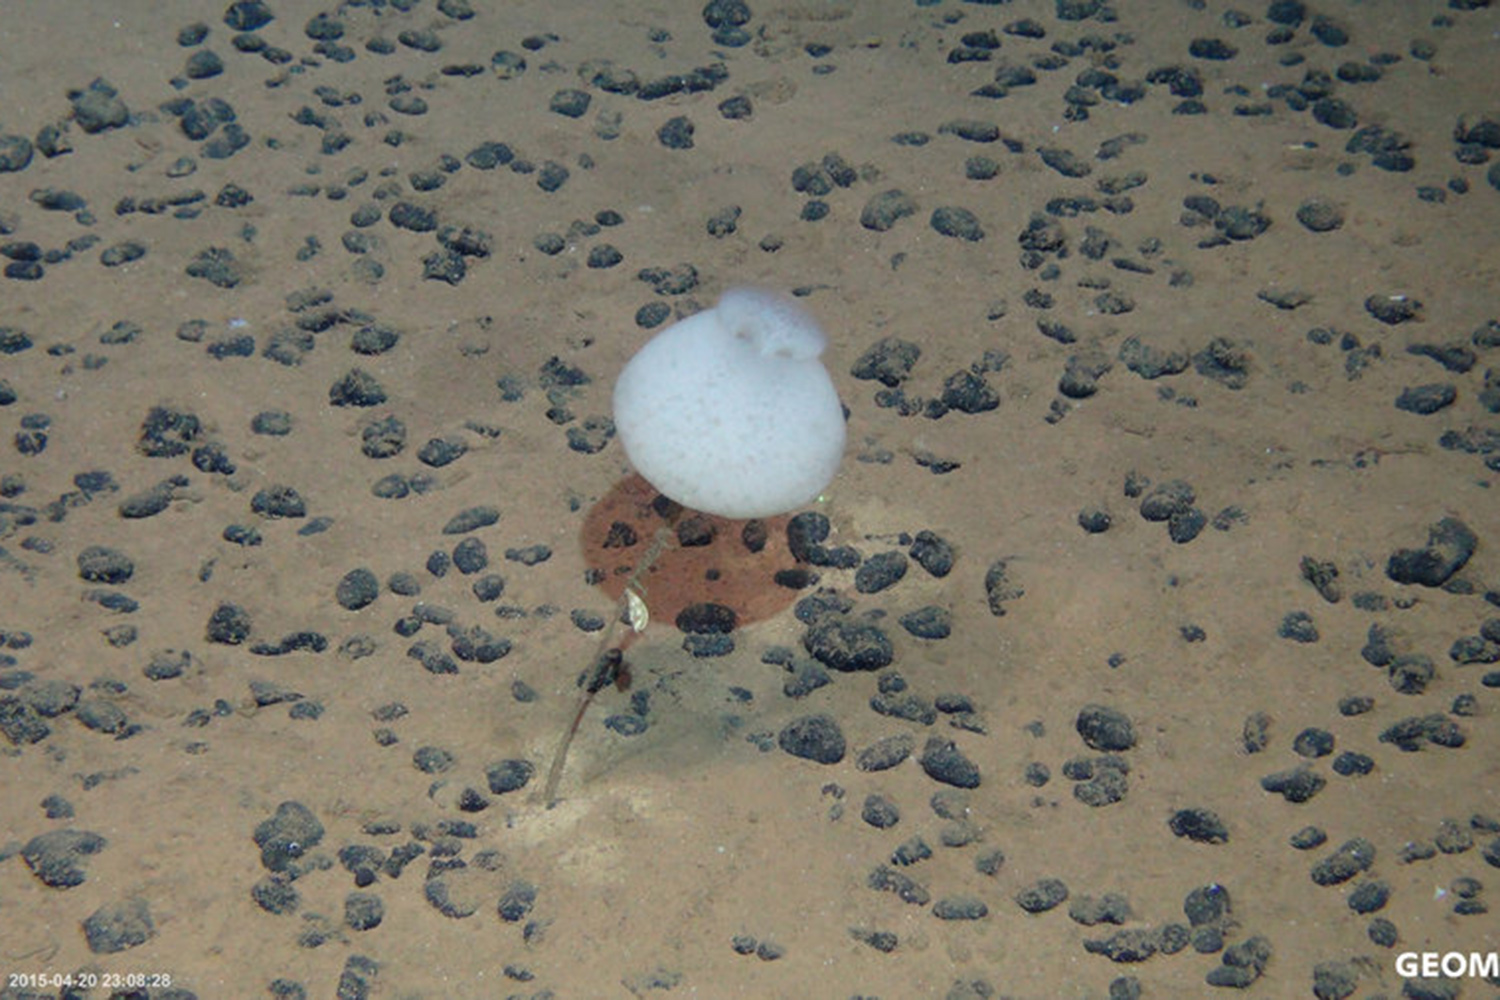 Manganknollen am Boden des Pazifiks. Foto: ROV Kiel 6000, GEOMAR.